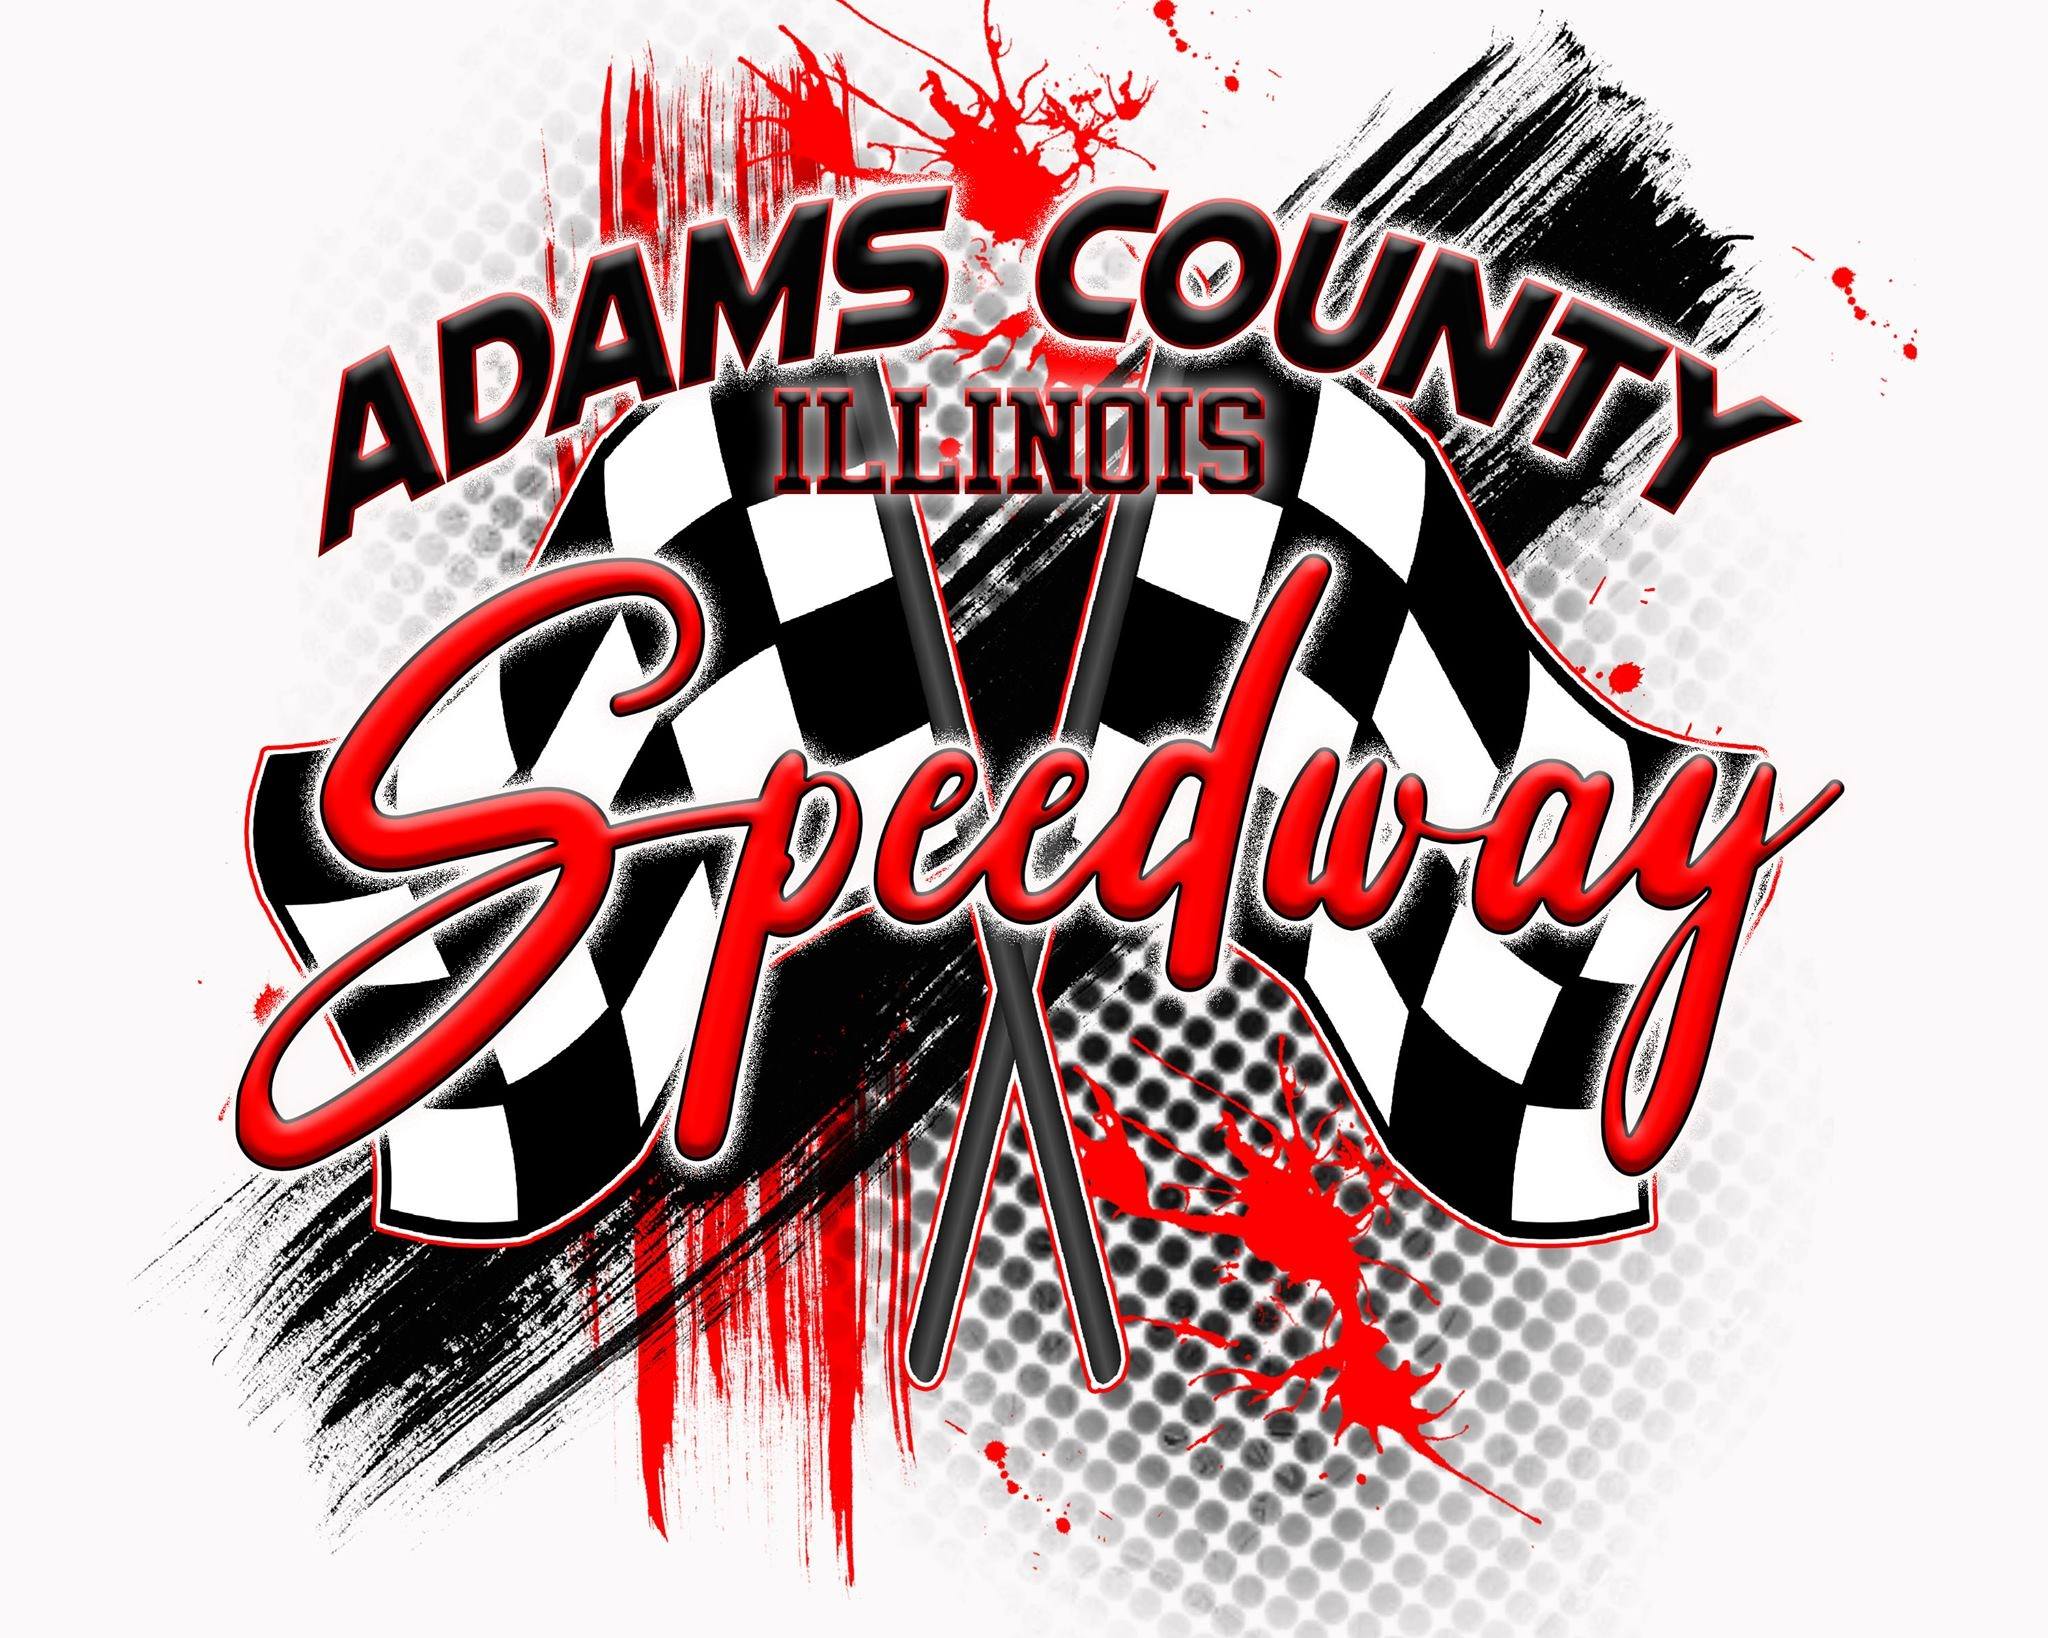 Adams County Speedway